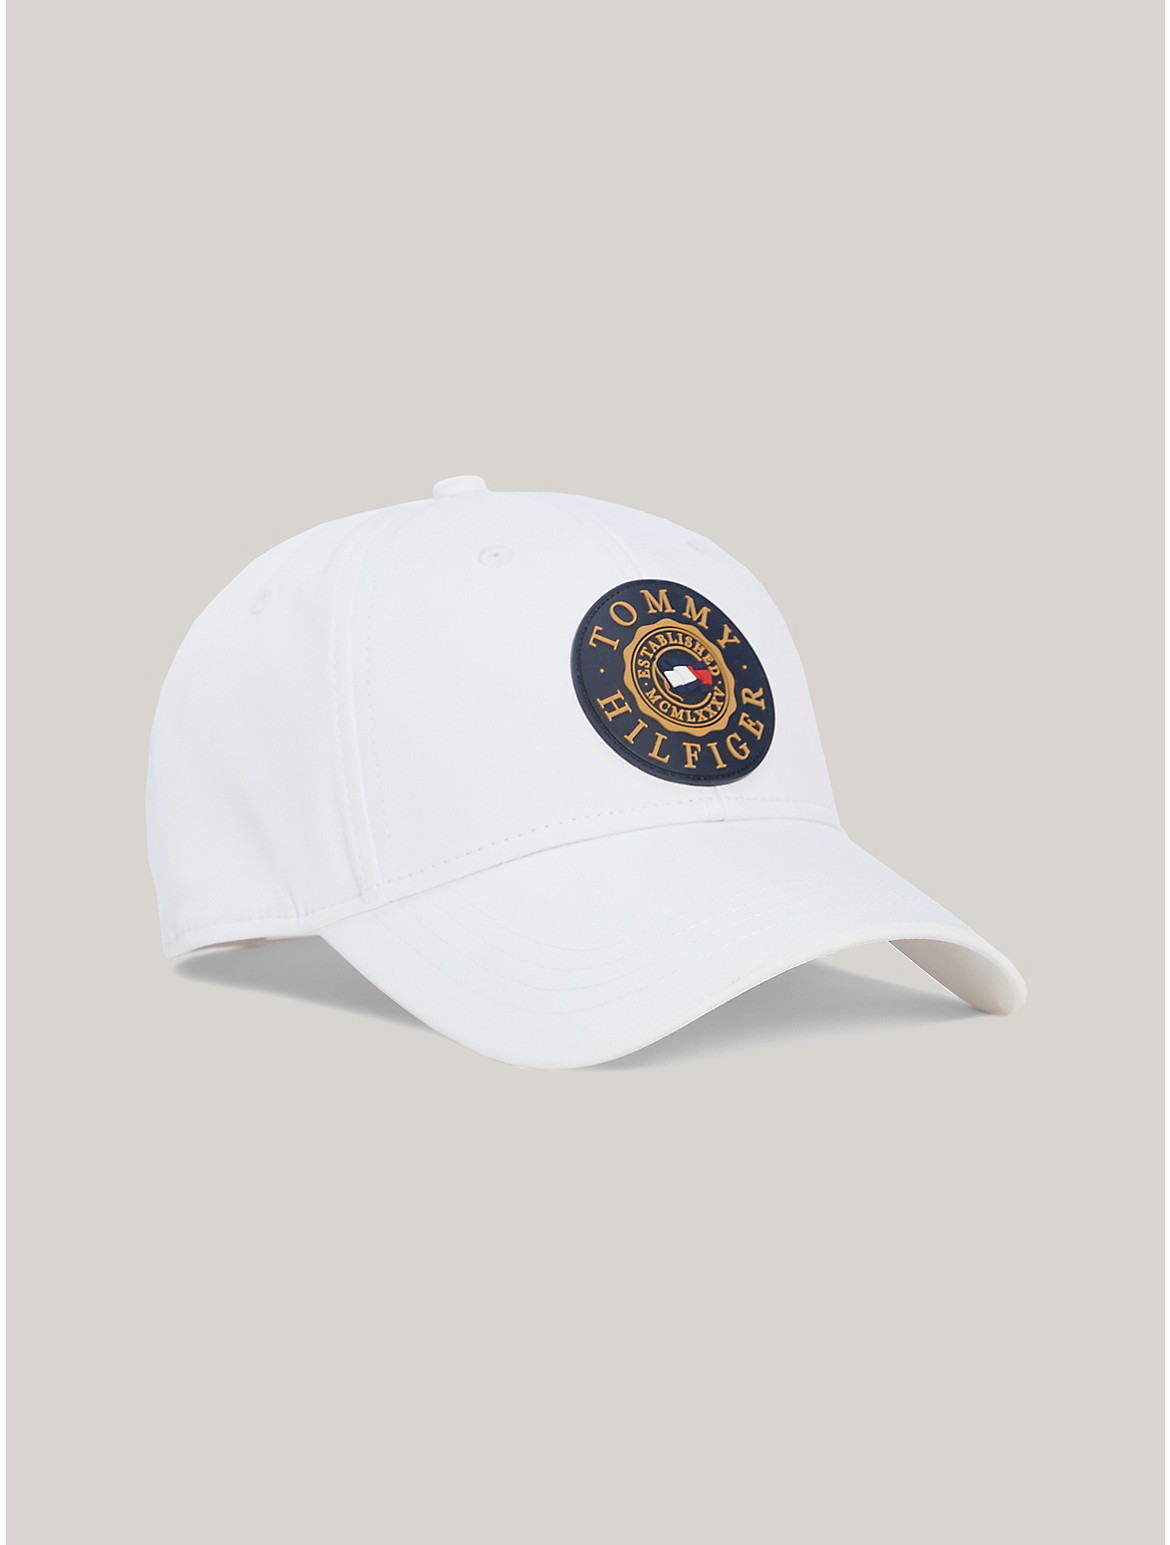 Tommy Hilfiger Hilfiger Flag Logo Hat In Classic White